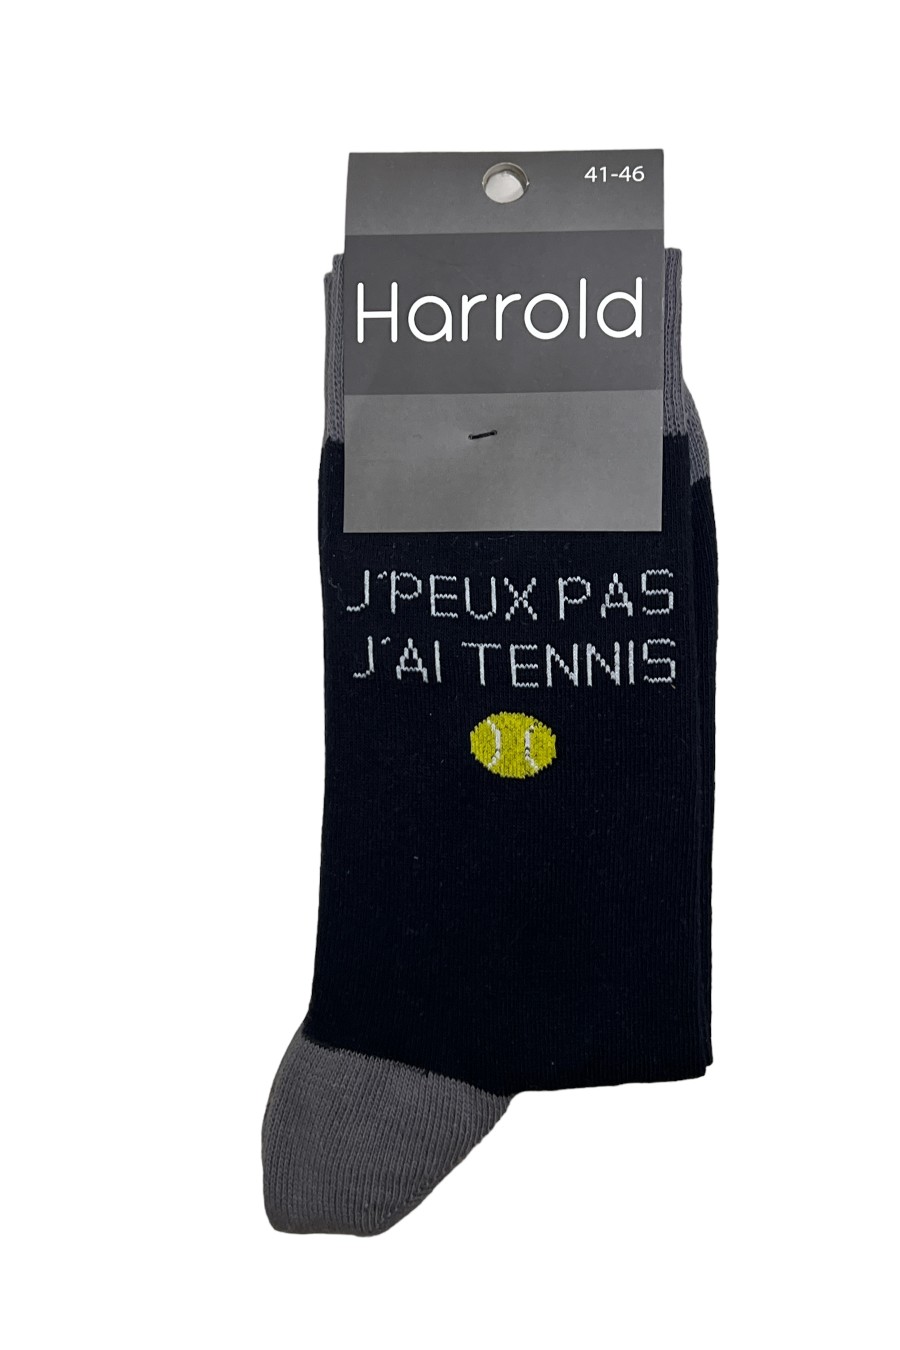 Chaussettes rigolotes Harrold J'peux pas j'ai tennis - Harrold